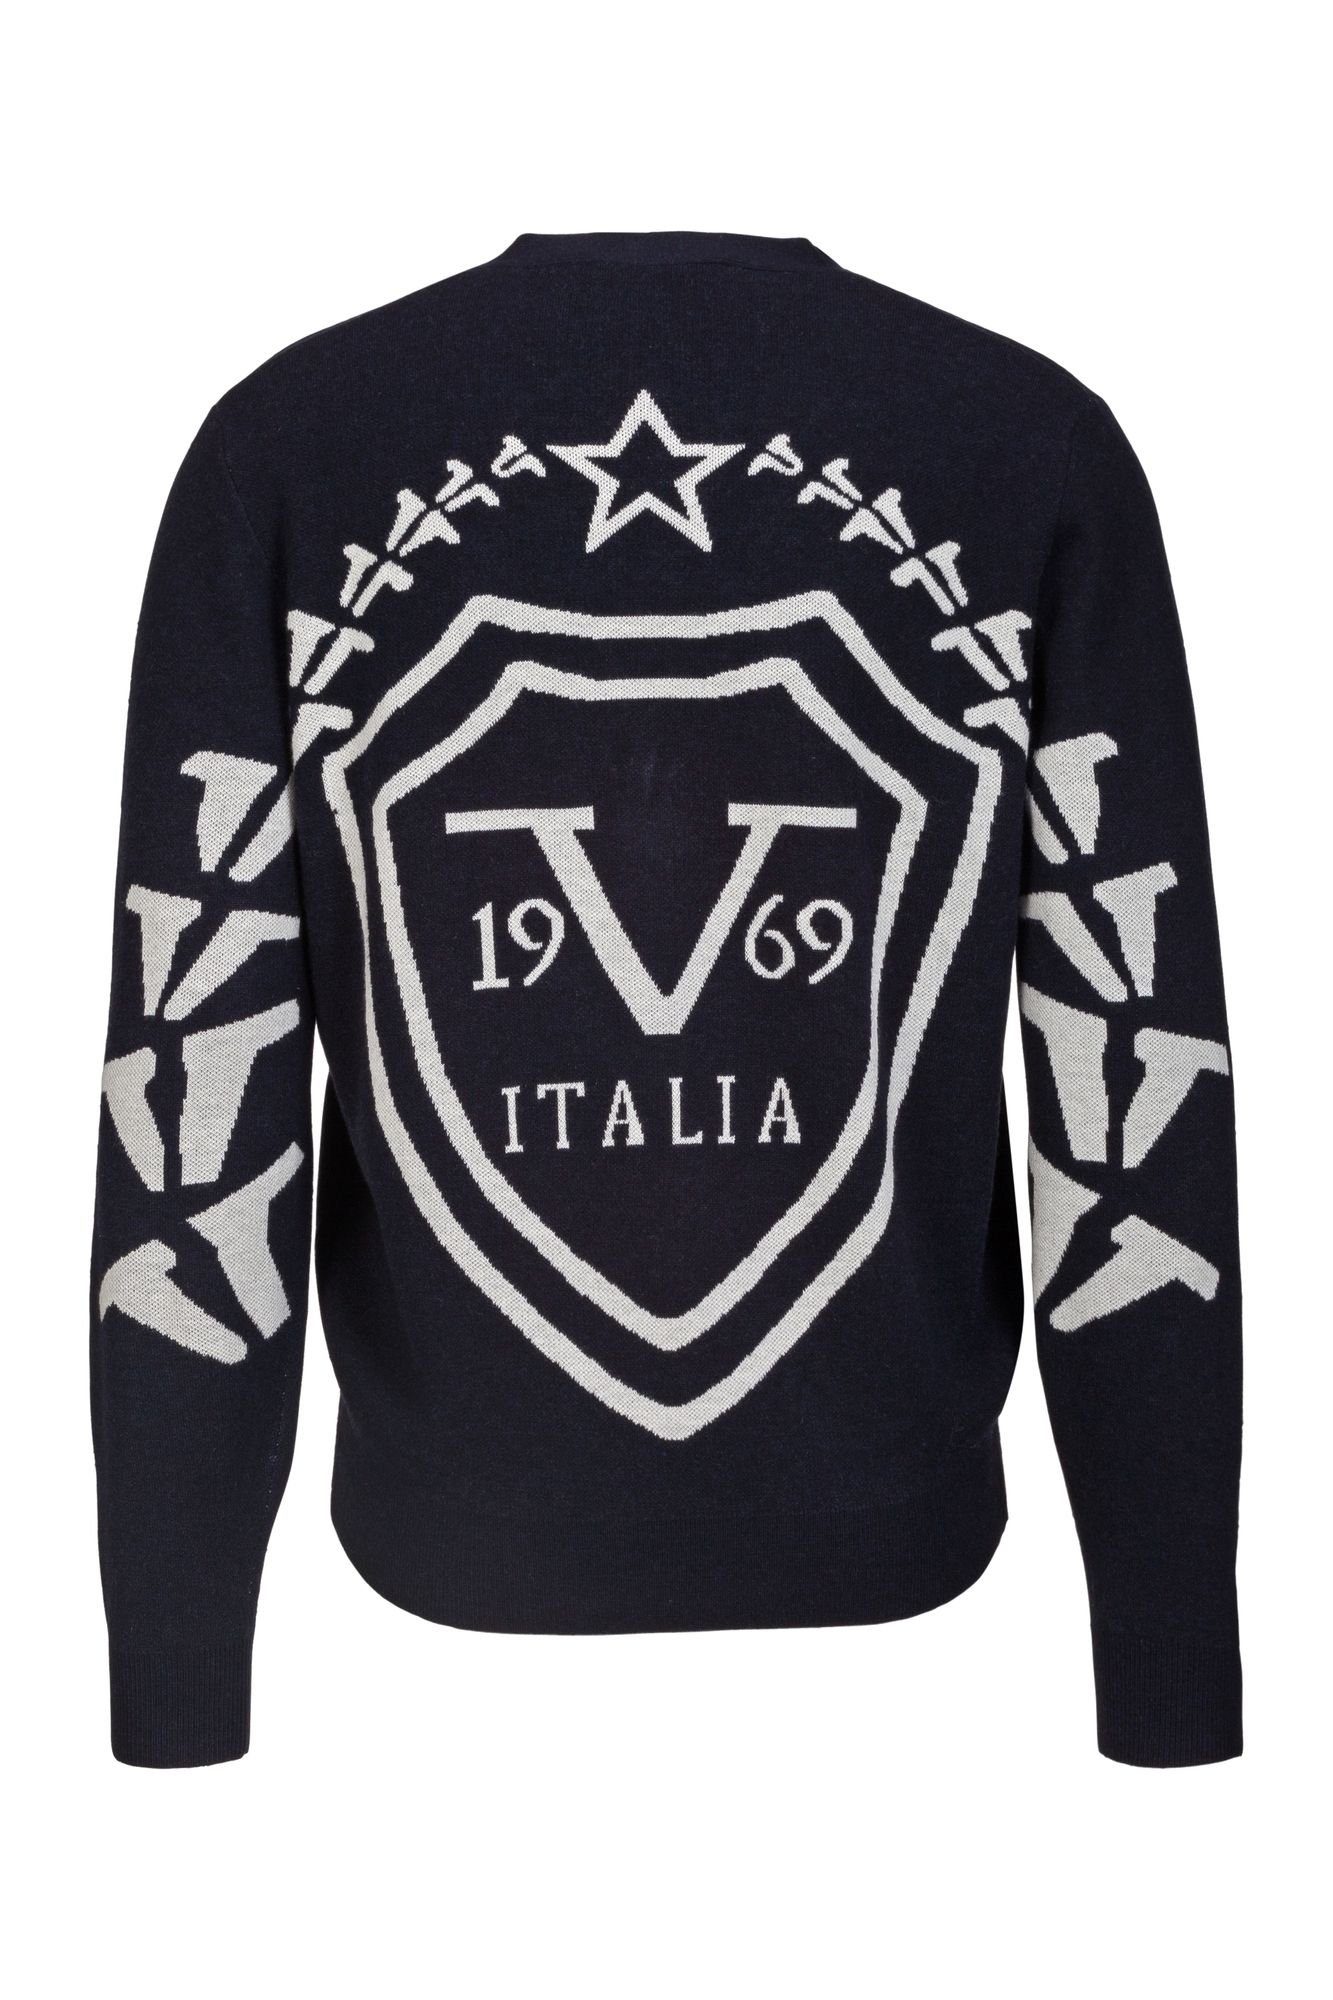 SRL Cristiano Cardigan - Versace Versace Sportivo by by Italia 19V69